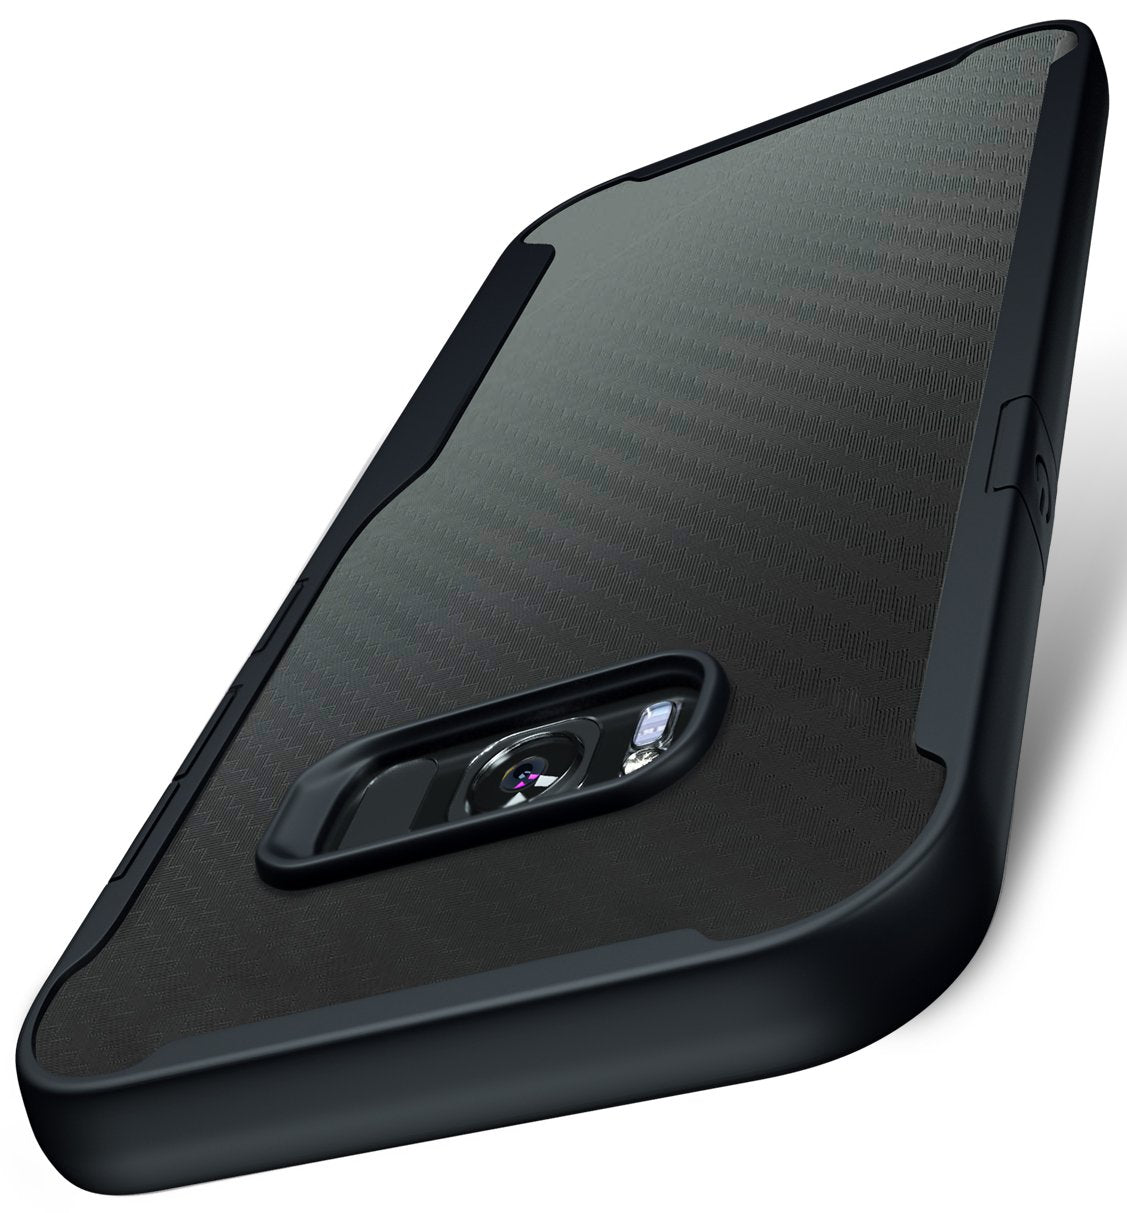 Samsung Galaxy S8 Kitoo Carbon Fiber Pattern Case Black